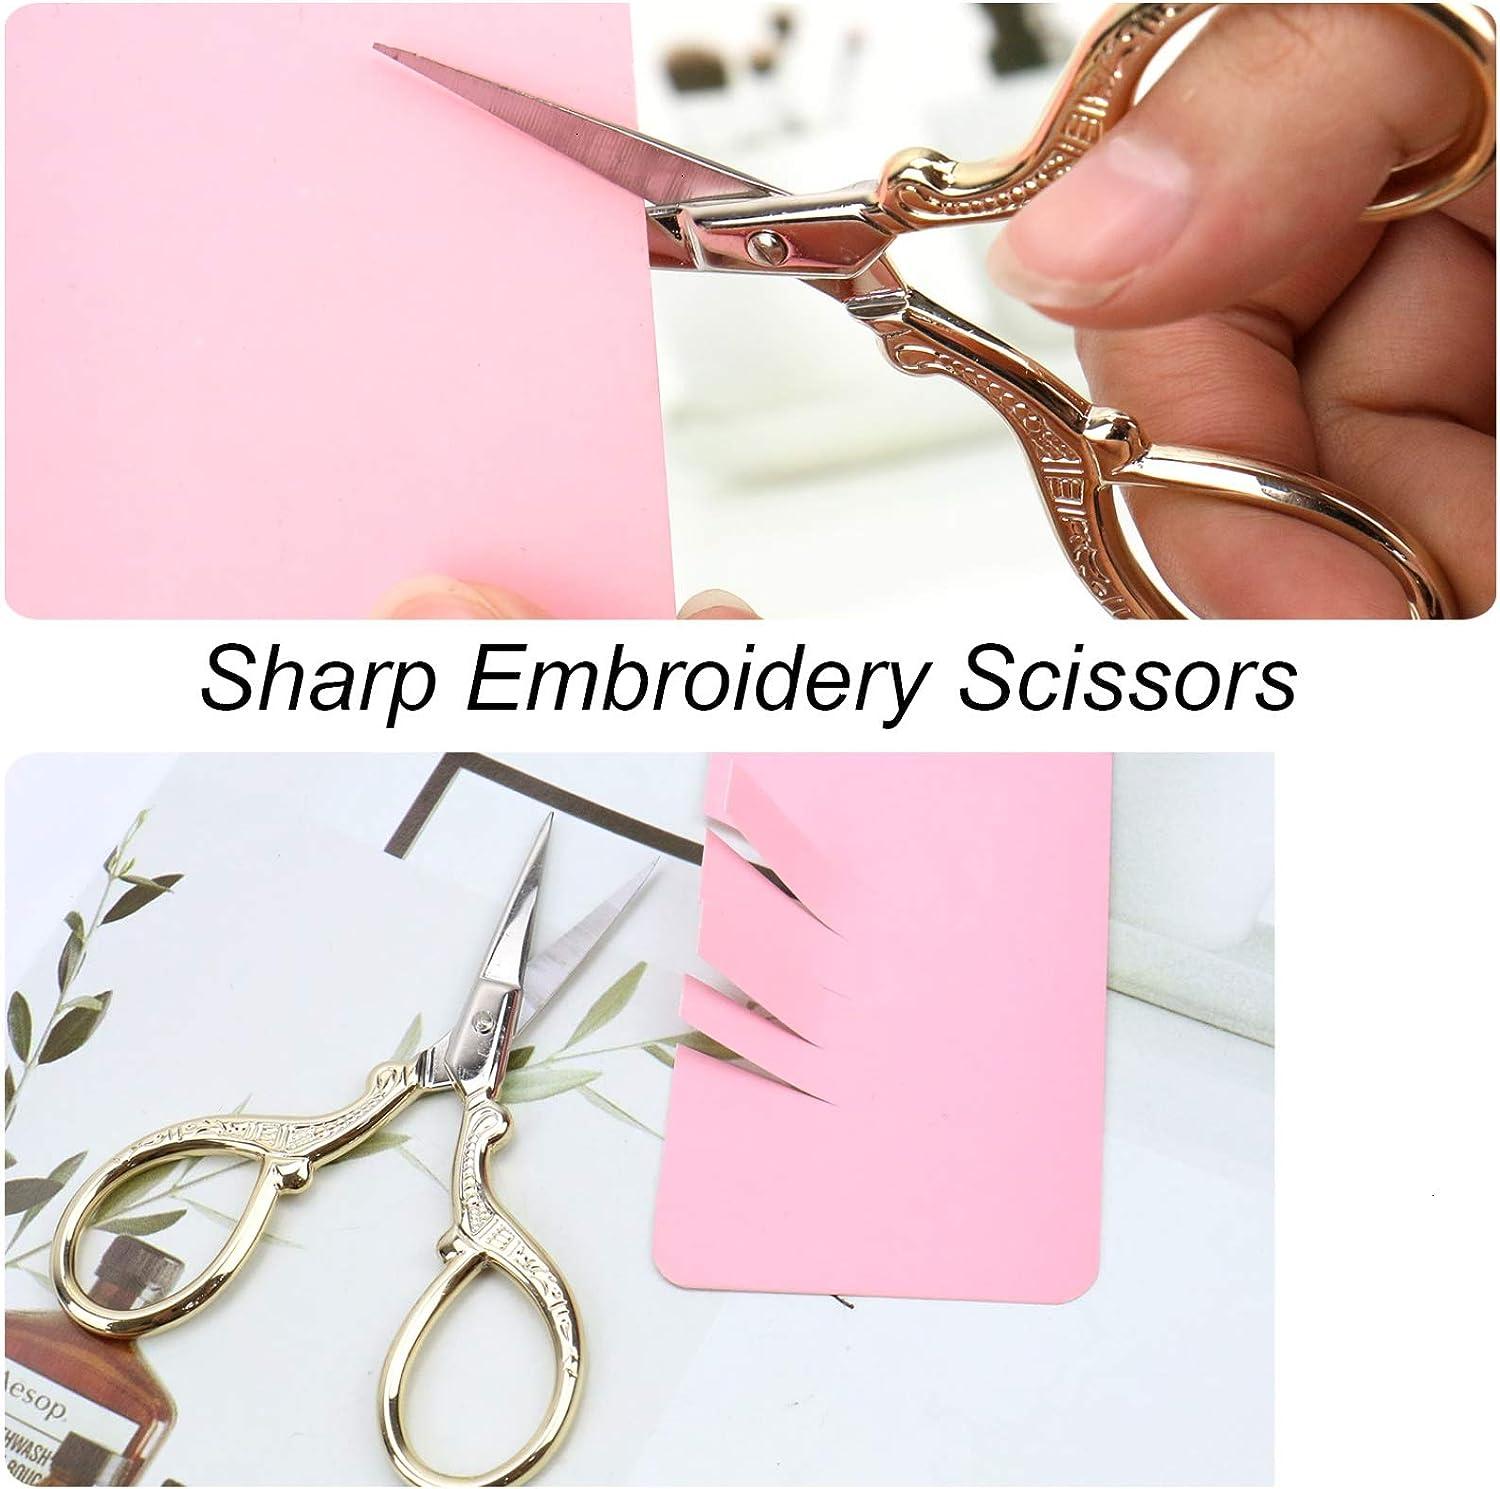 Craft Scissors Sharp, Embroidery Scissors